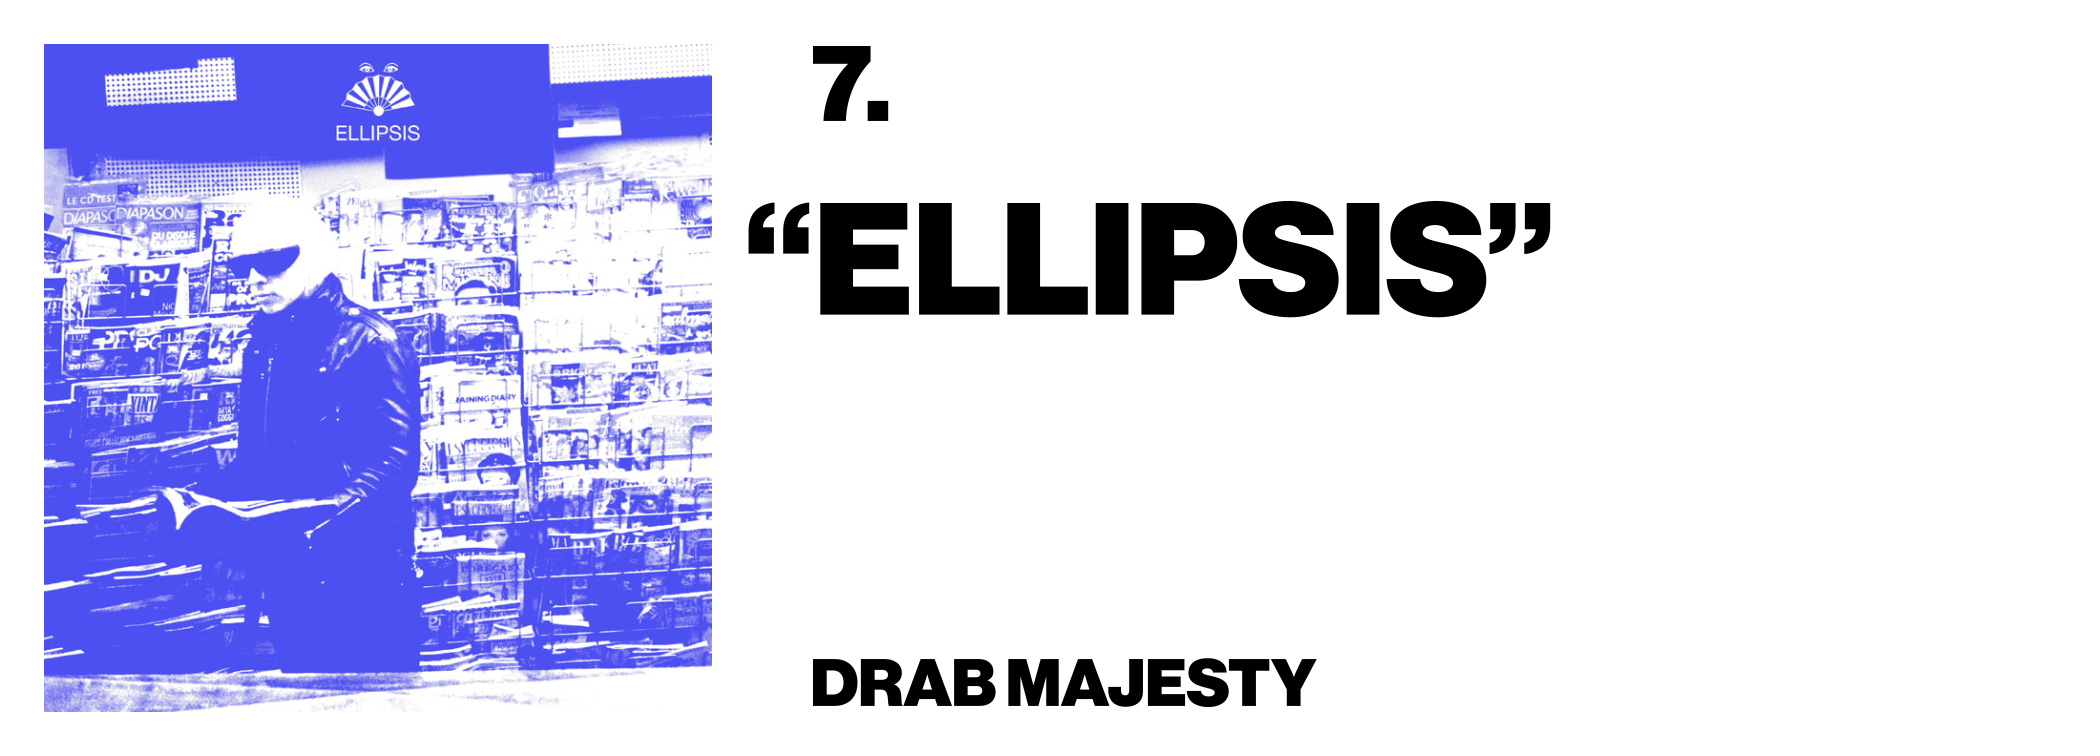 1576524706842-7-Drab-Majesty-Ellipsis